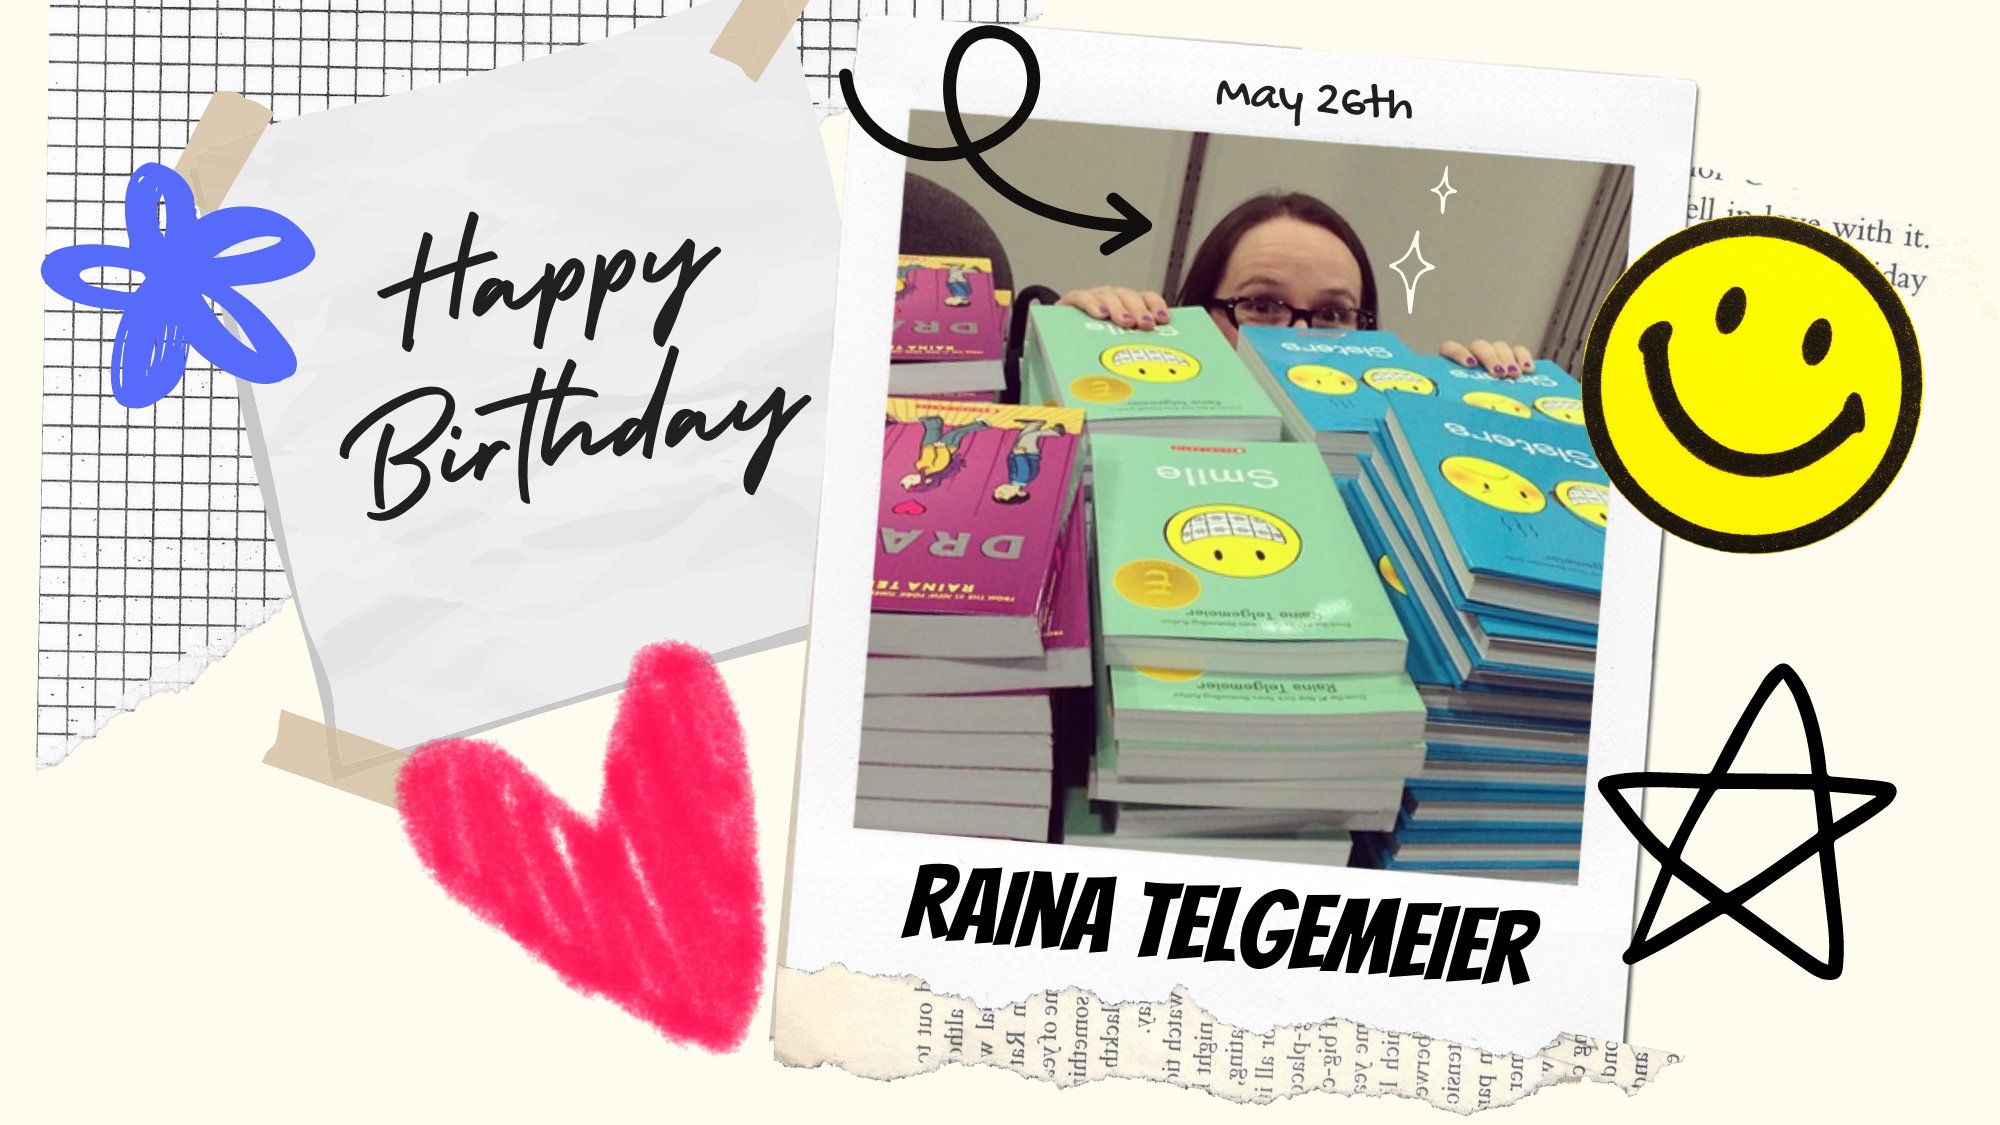 Happy birthday Raina Telgemeier! Learn more about her work here:  